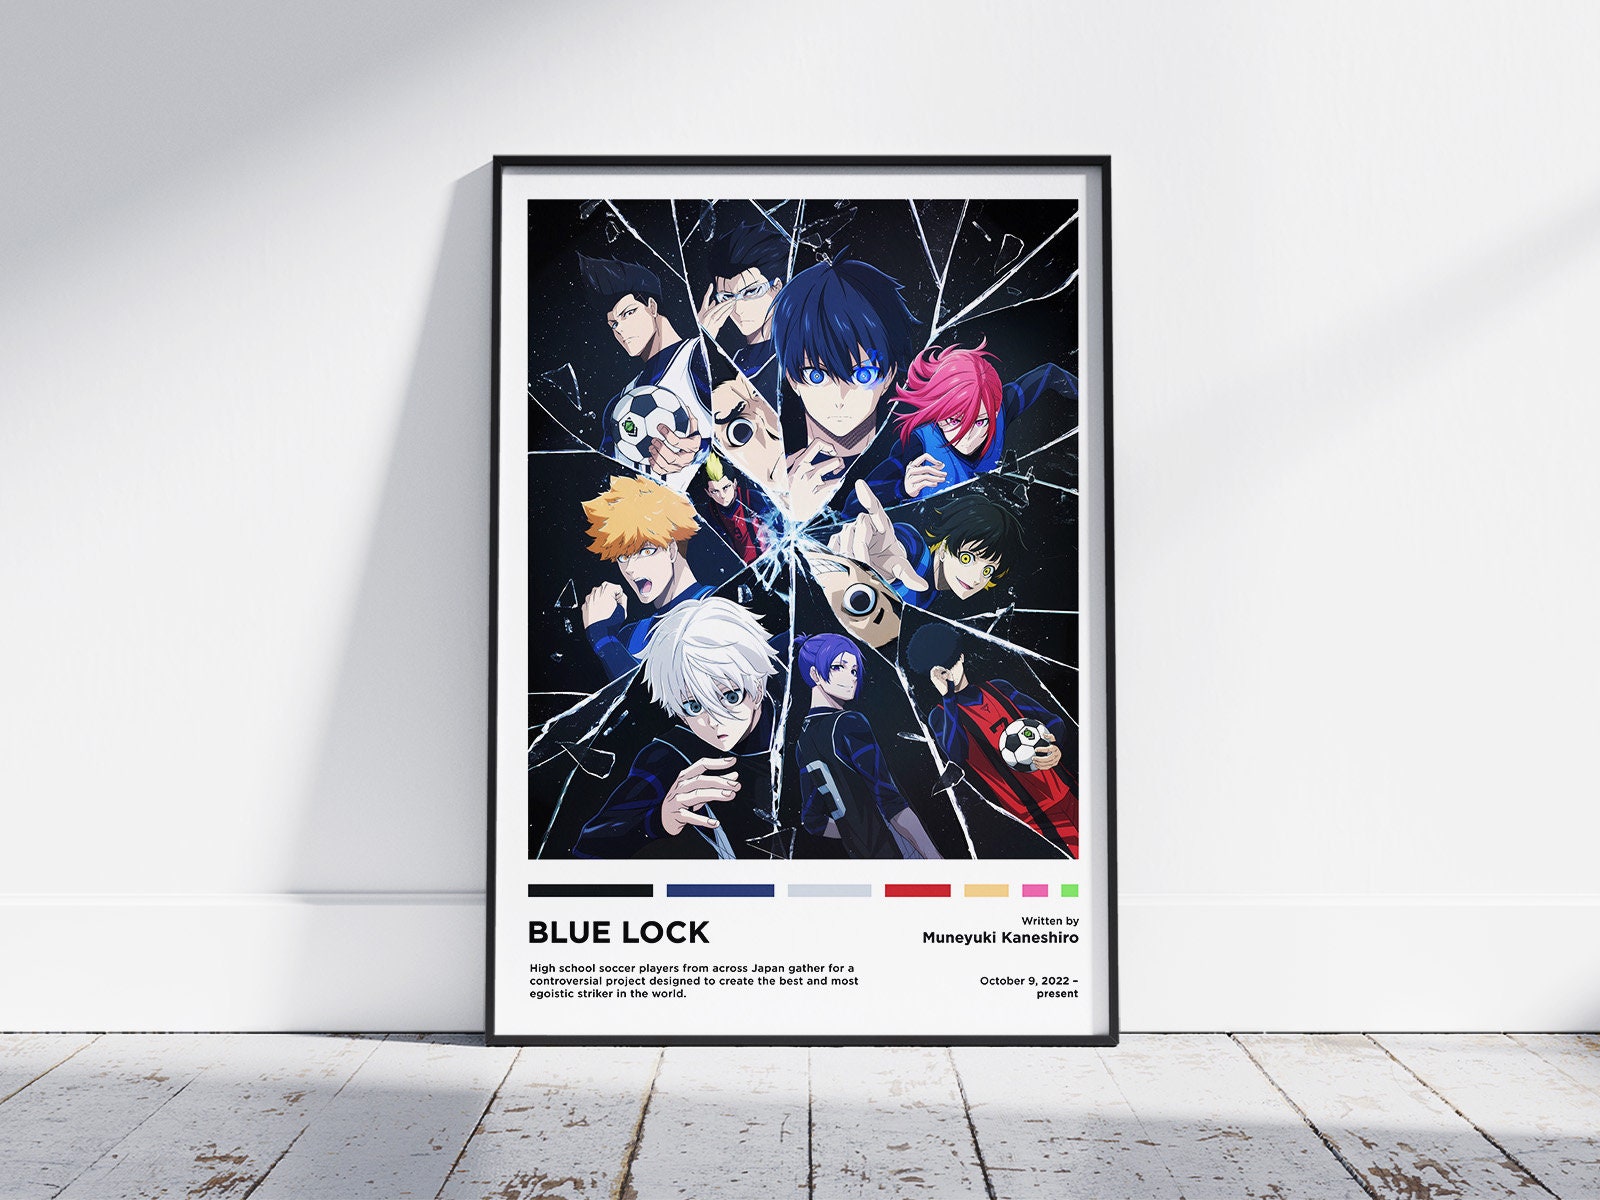 Blue Lock Anime Icons SVG Isagi Yoichi Blue Lock Digital Files 